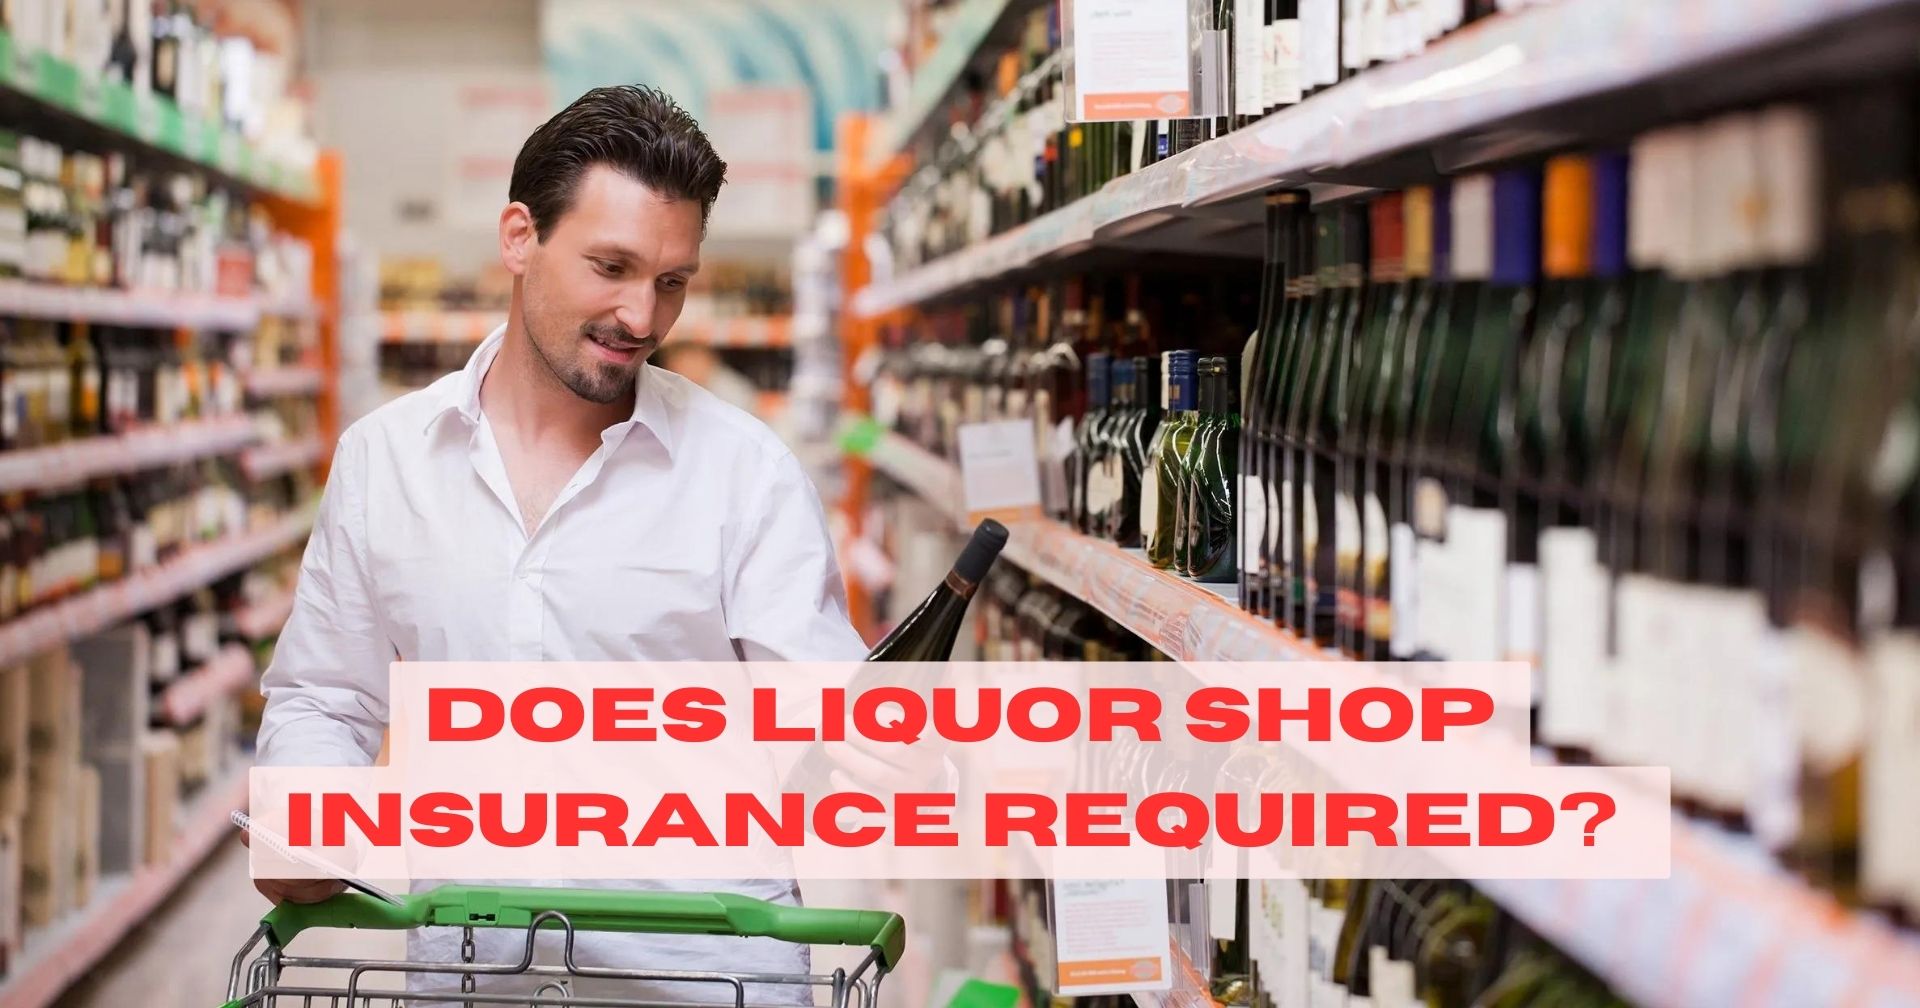 Liquor Shop Insurance, Liquor Shop Insurance Required, Liquor Shop , Insurance, Shop insurance, Liquor Store Insurance